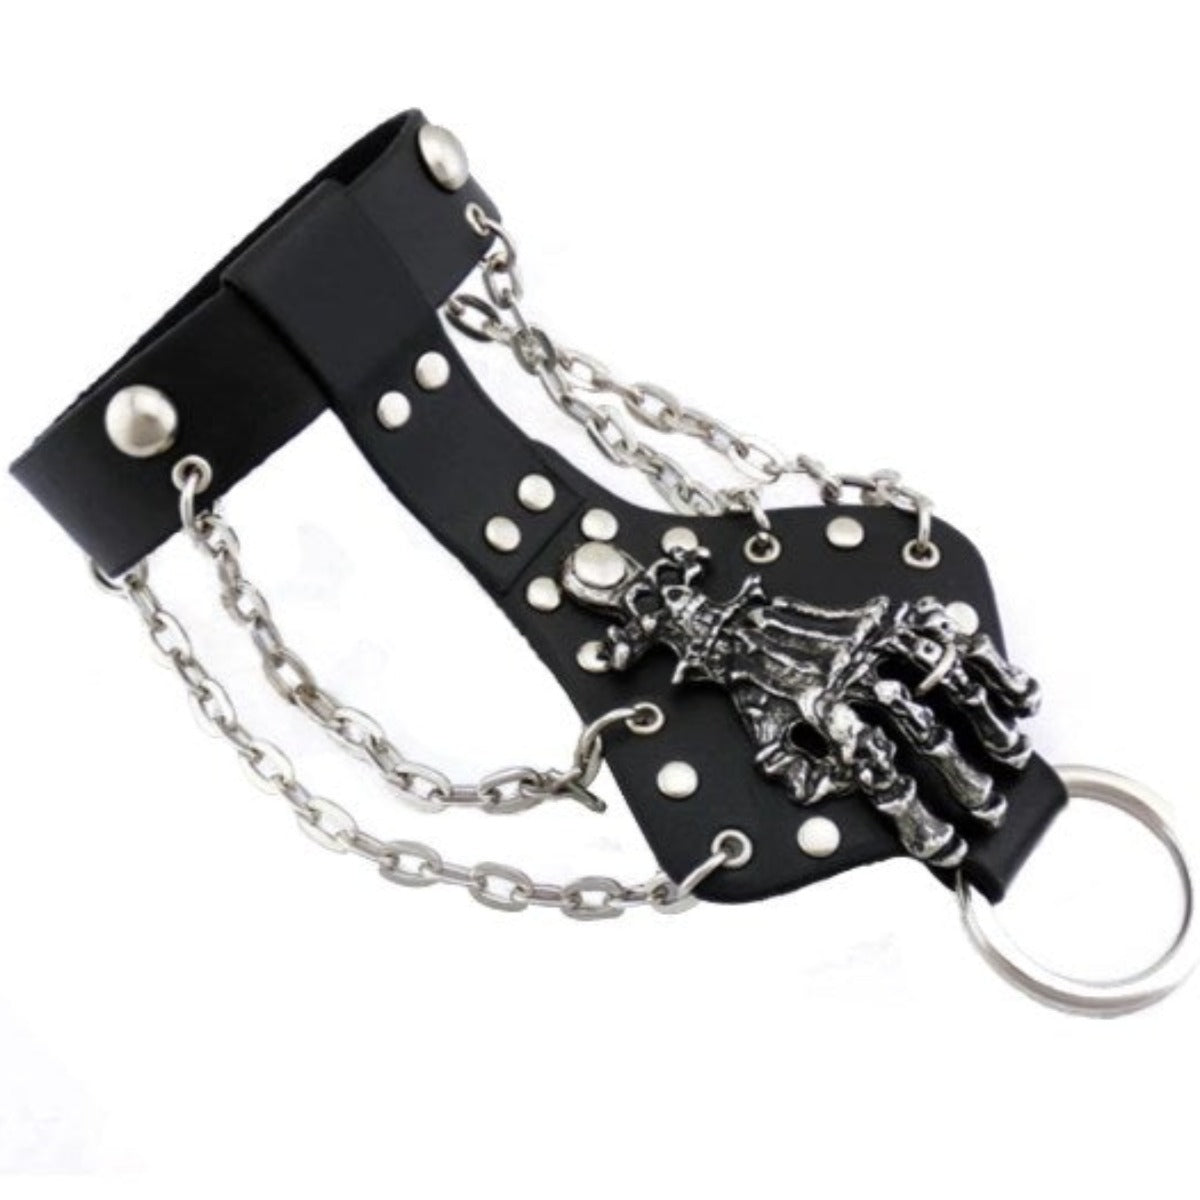 Spike Skeleton Leather Cuff Bracelet